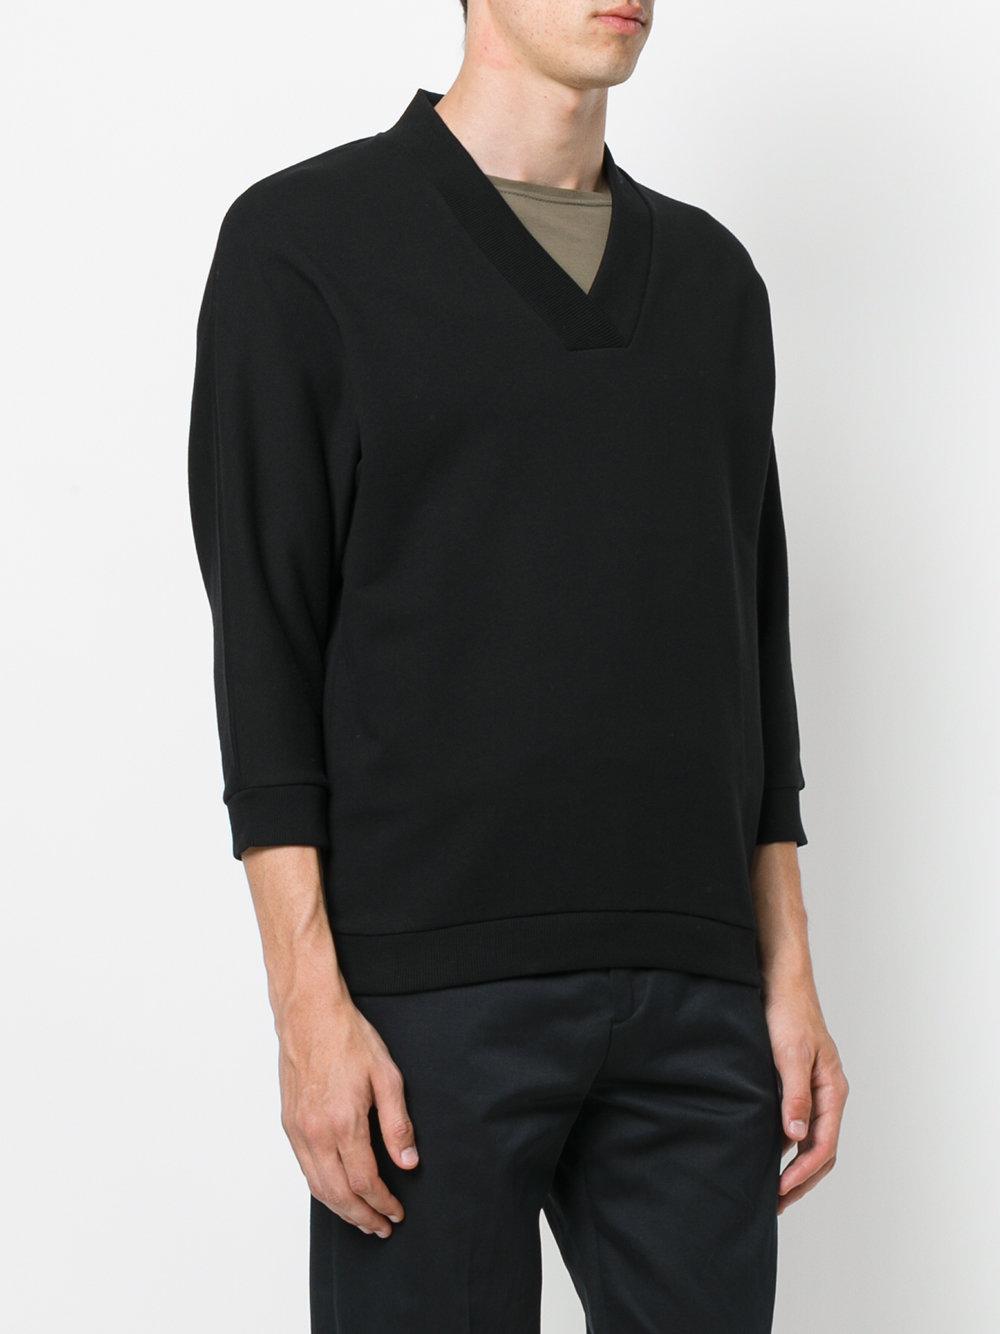 KENZO Cotton Paris Printed Back Sweatshirt in Black for Men | Lyst